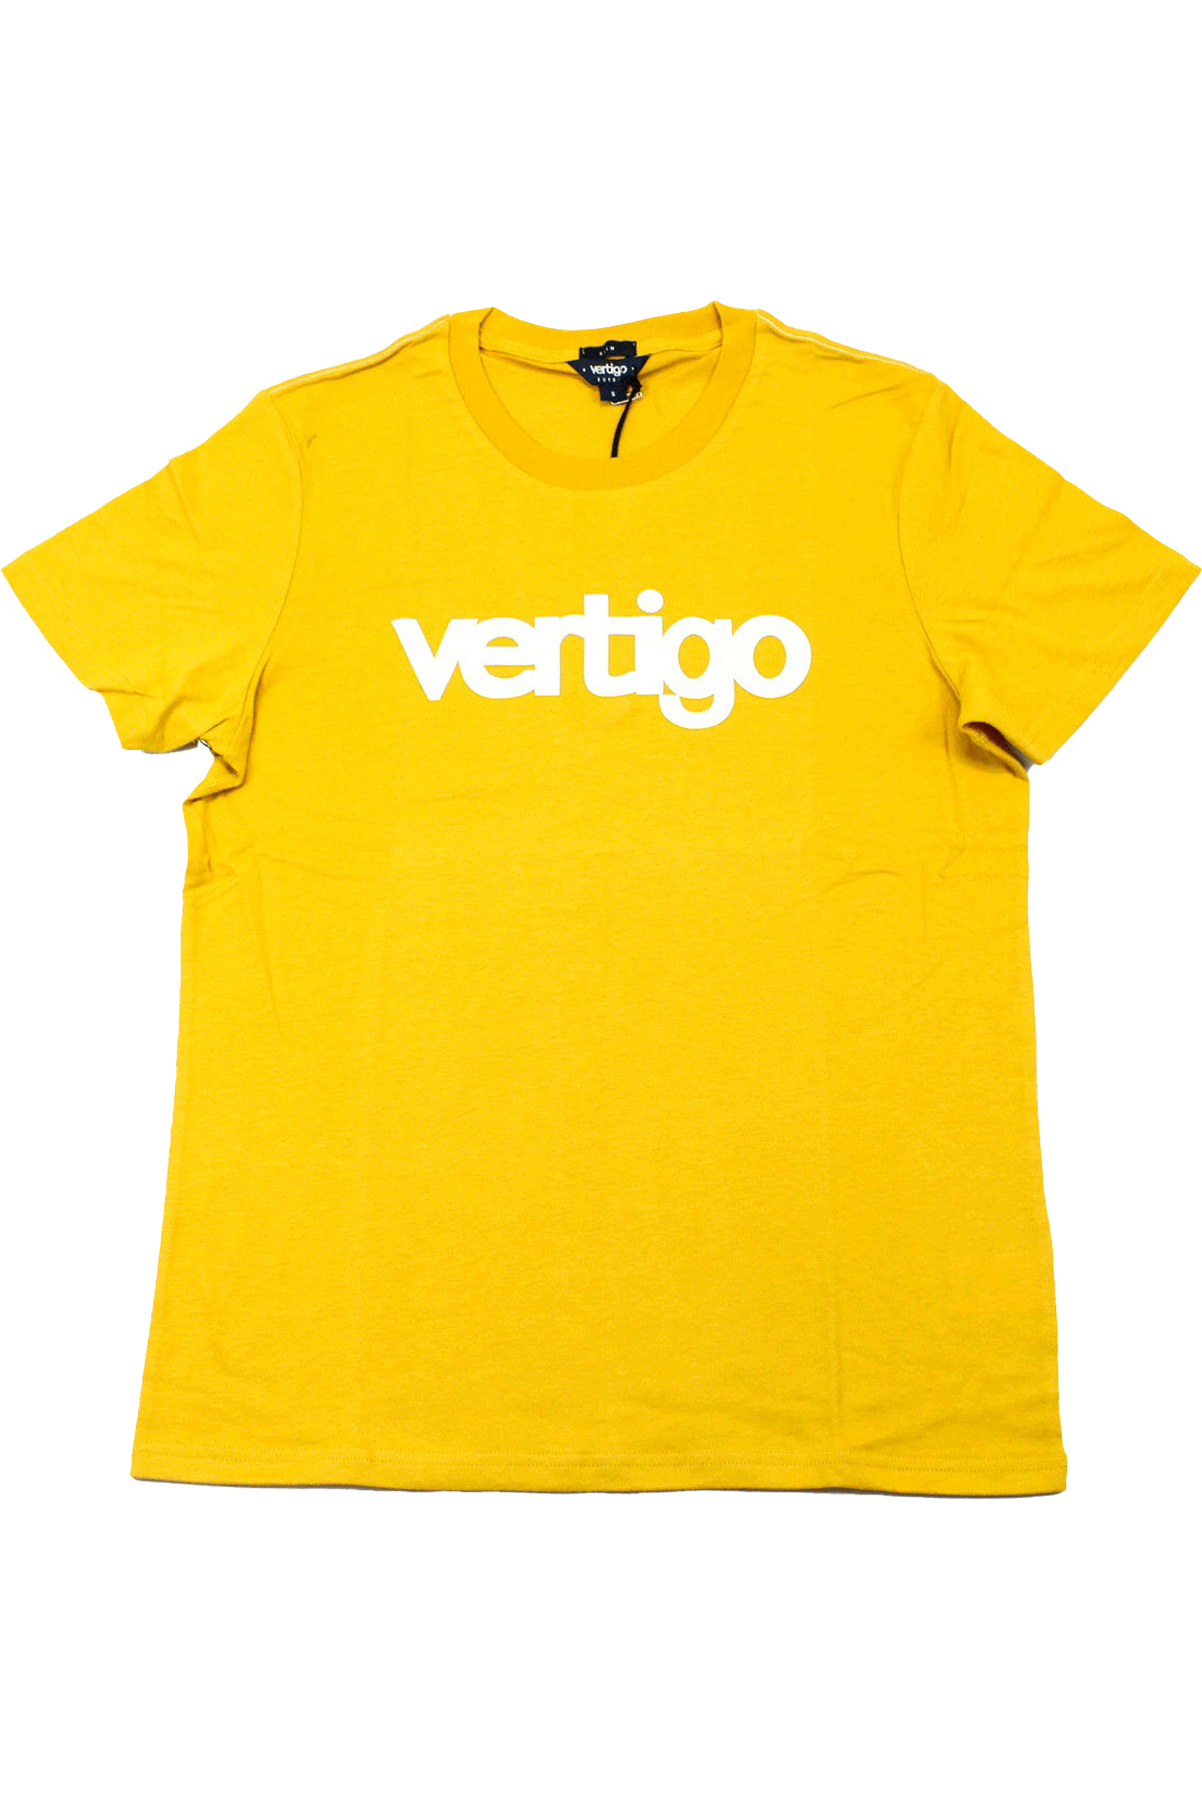 Vertigo Mustard T-Shirt